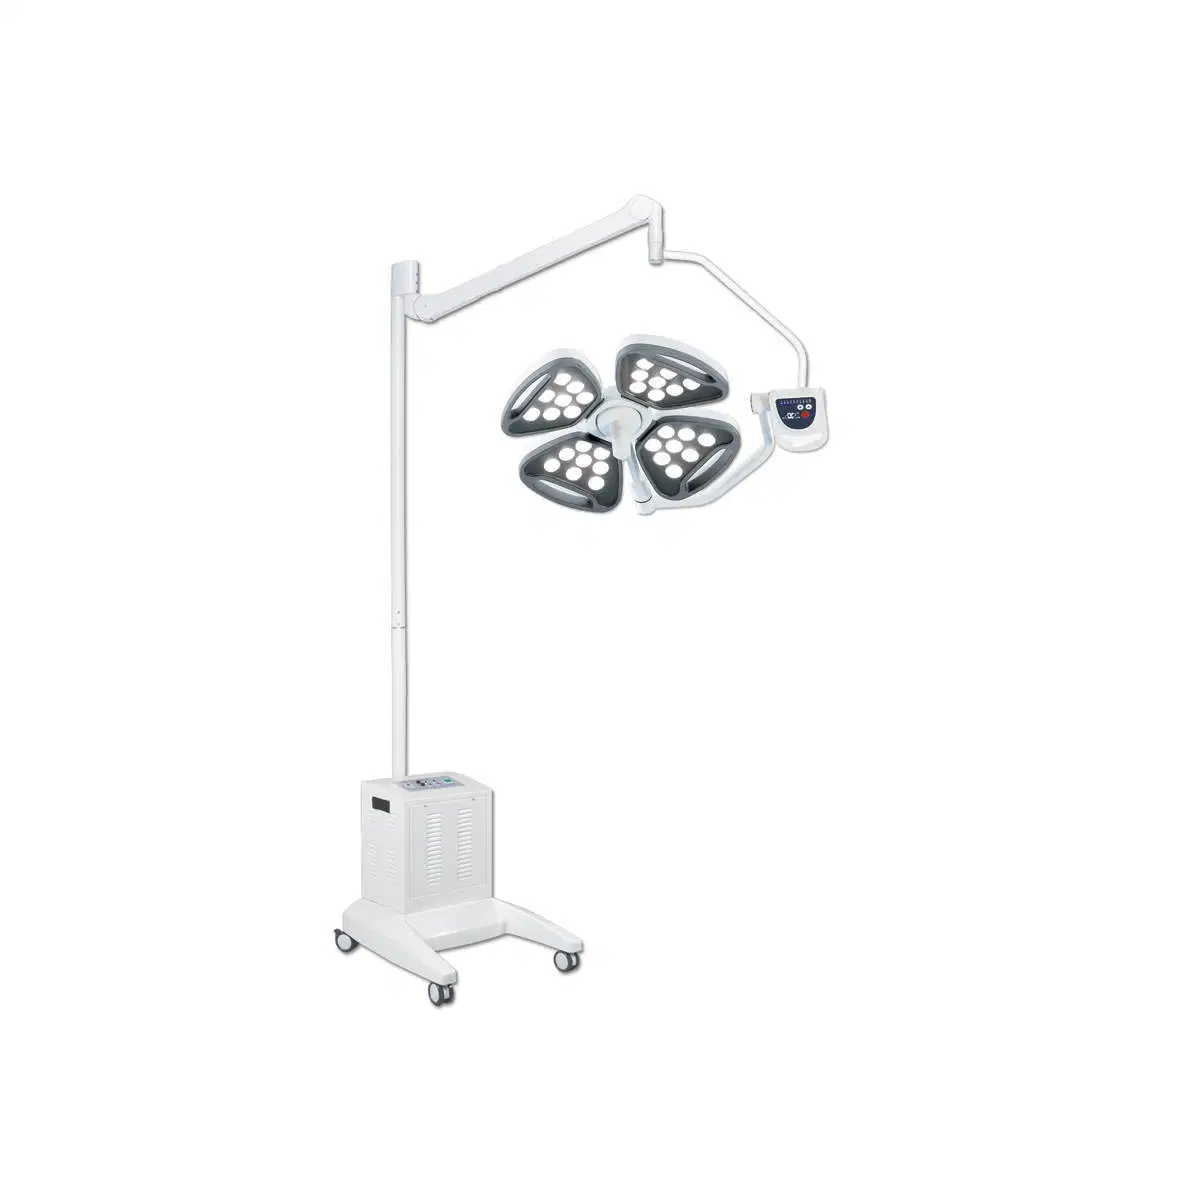 LED Shadowless LED Medical Light Medical Illuminate Surgical Ot Lamp Equipment Best Selling Hospital Instrument